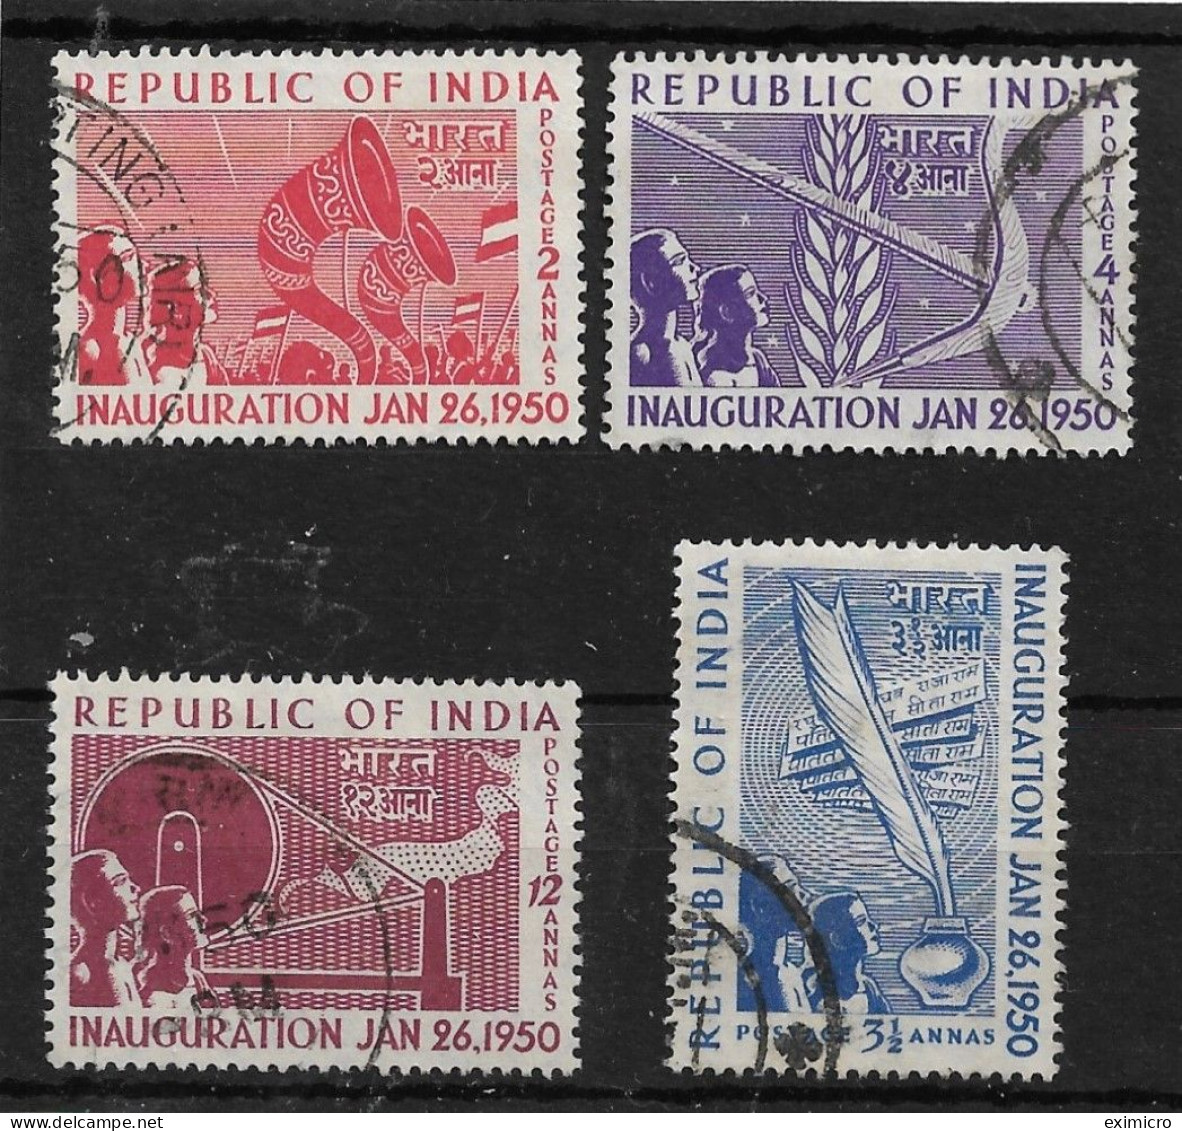 INDIA 1950 INAUGURATION OF REPUBLIC SET SG 329/332 FINE USED Cat £17 - Oblitérés